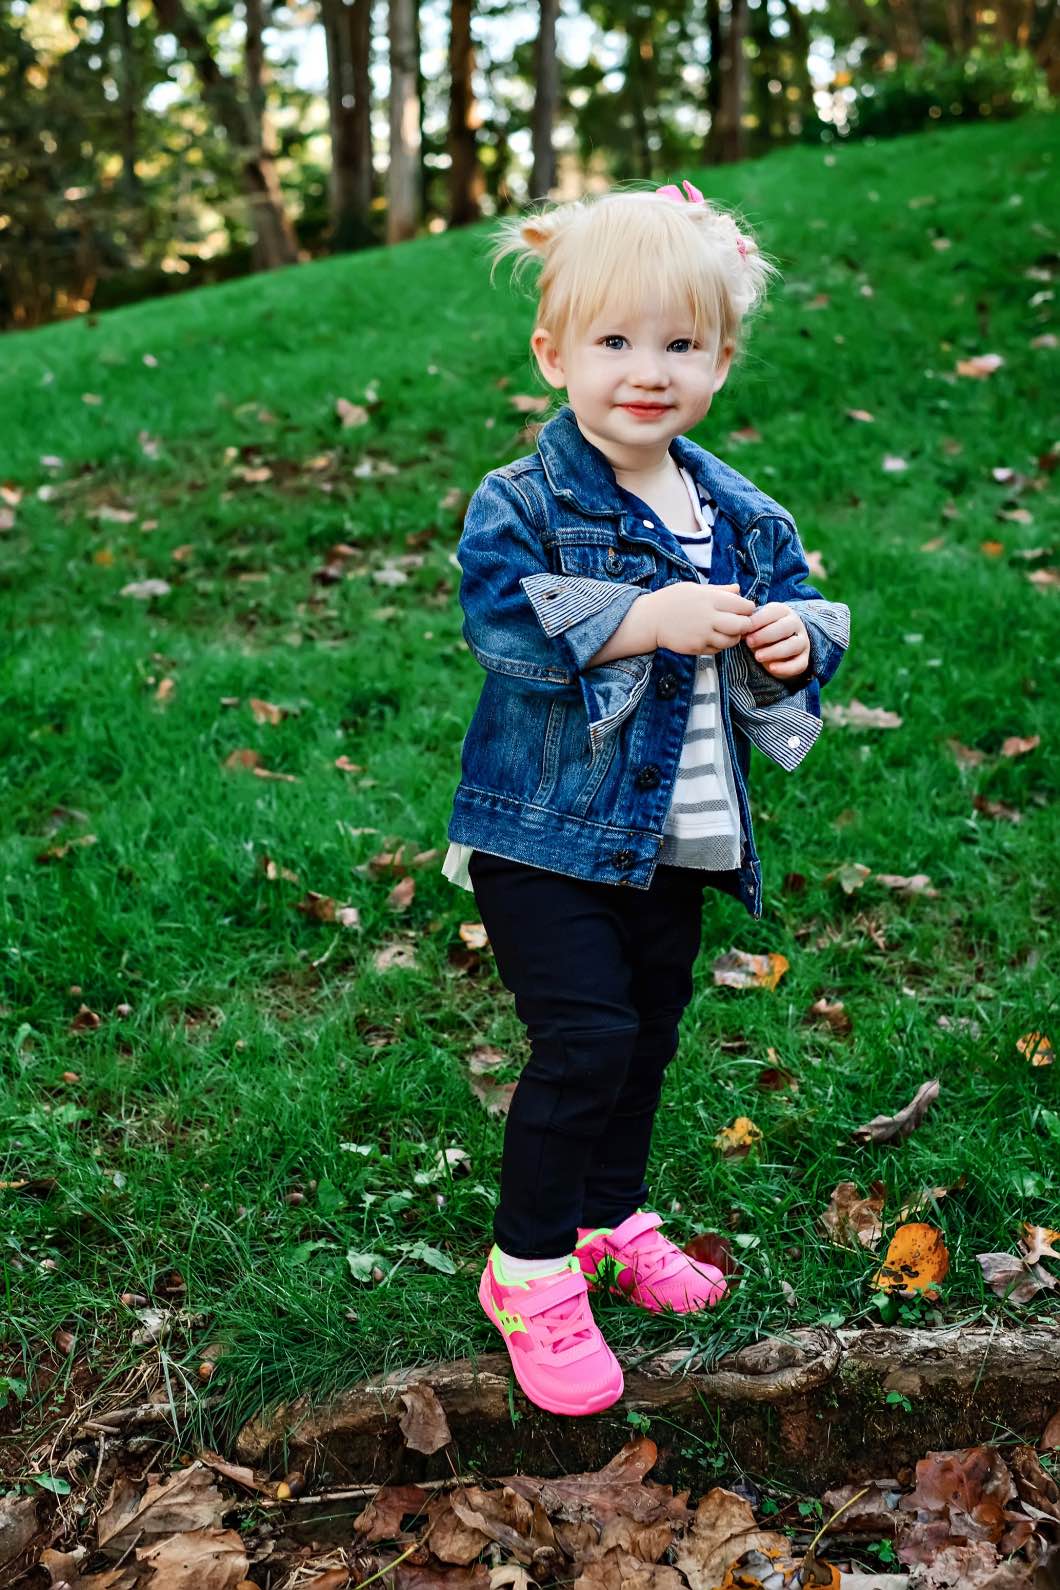 atlantachildmodelkidsshoes - Great Toddler Shoes for Girls by Atlanta mom blogger Happily Hughes